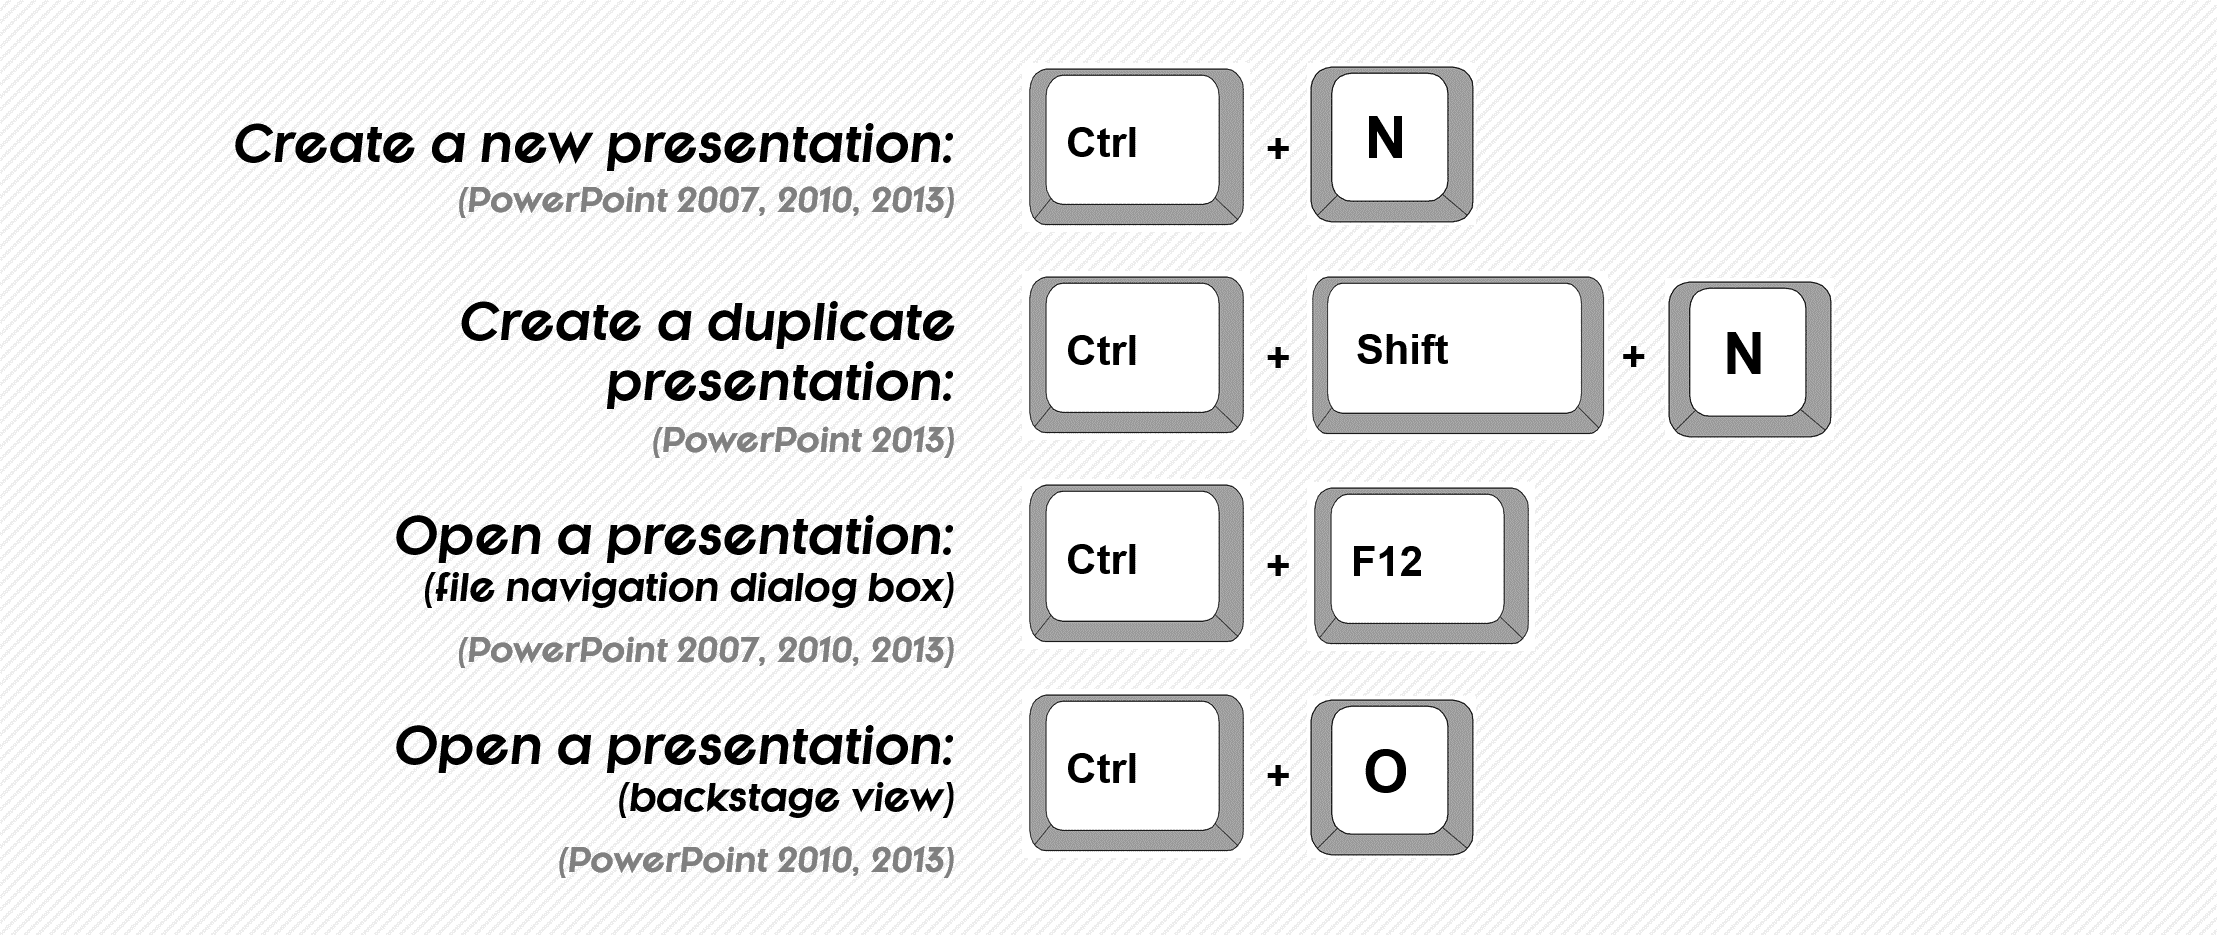 shortcut key to start powerpoint presentation